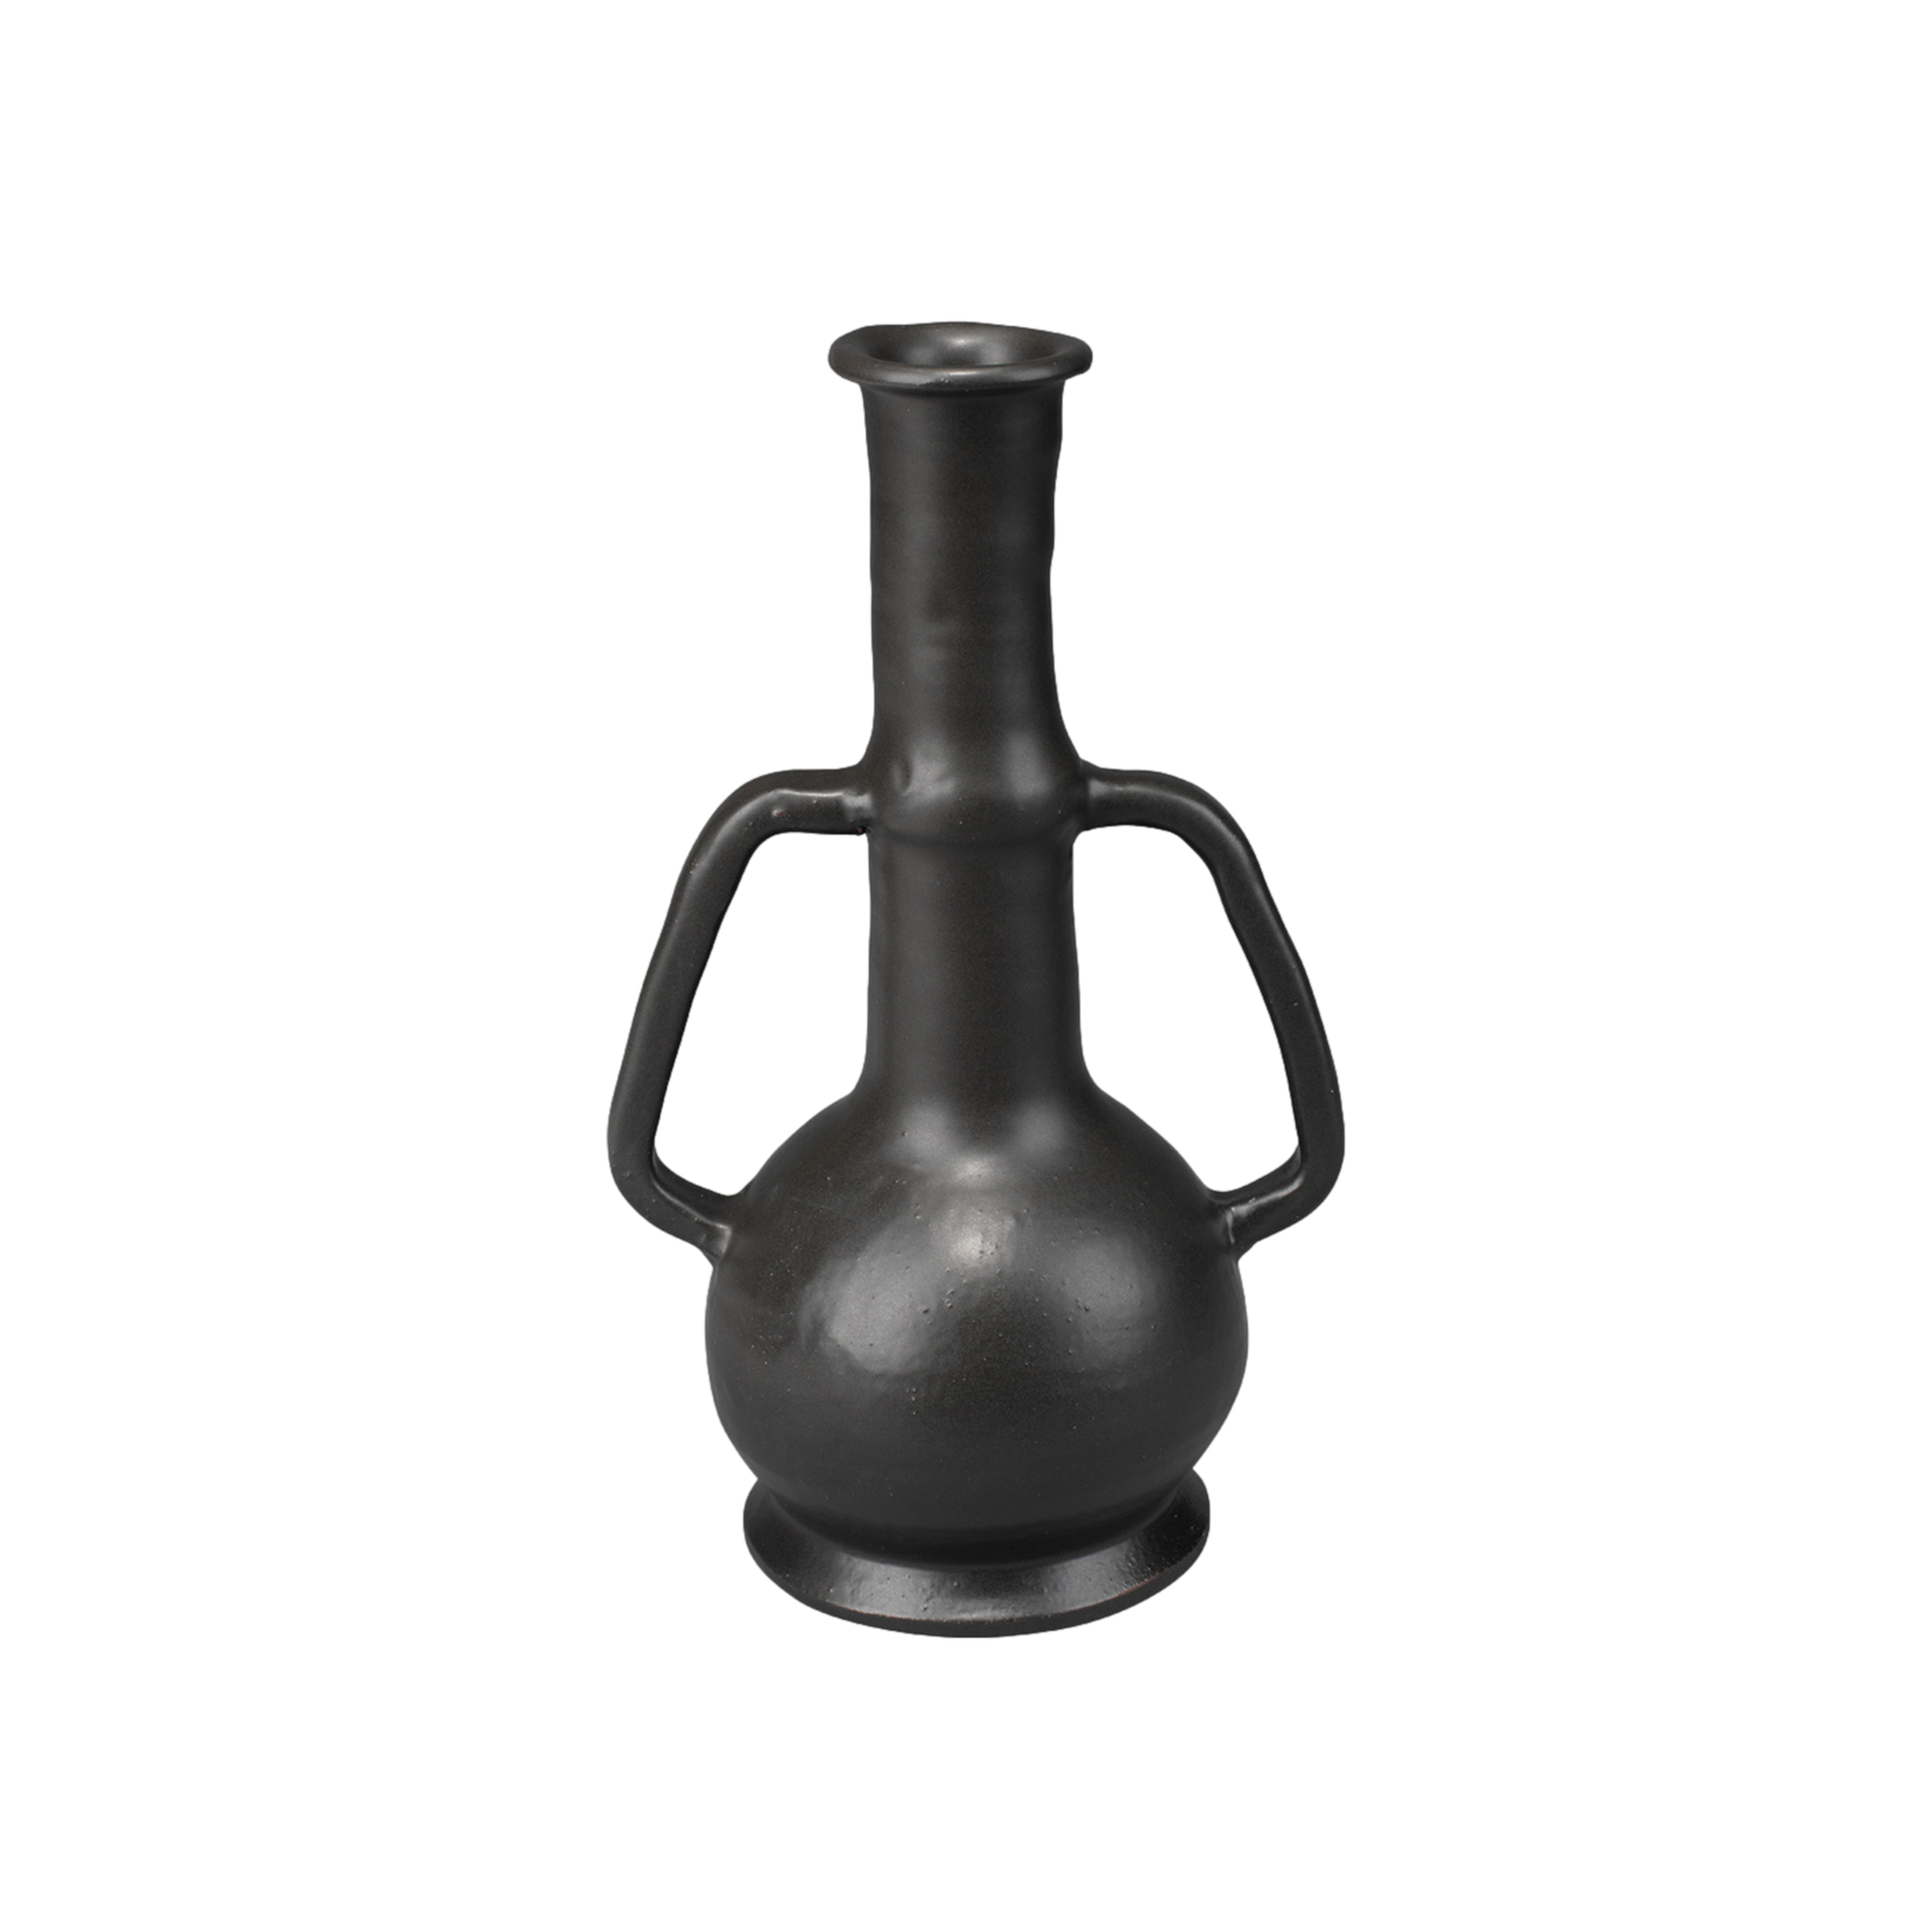 Horton Handled Vase